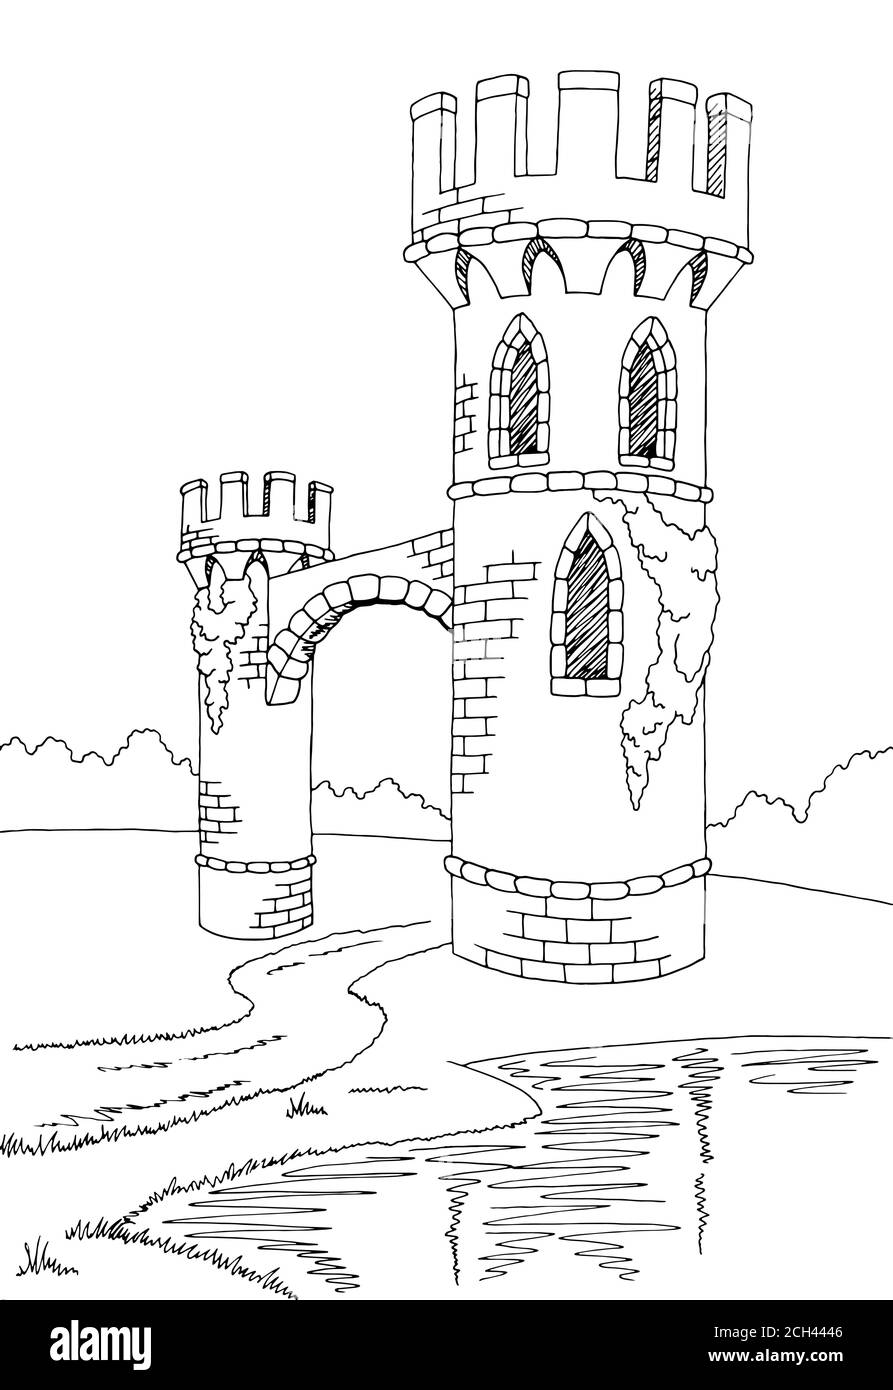 Alte Turm Grafik schwarz weiß See Landschaft Skizze Illustration Vektor Stock Vektor